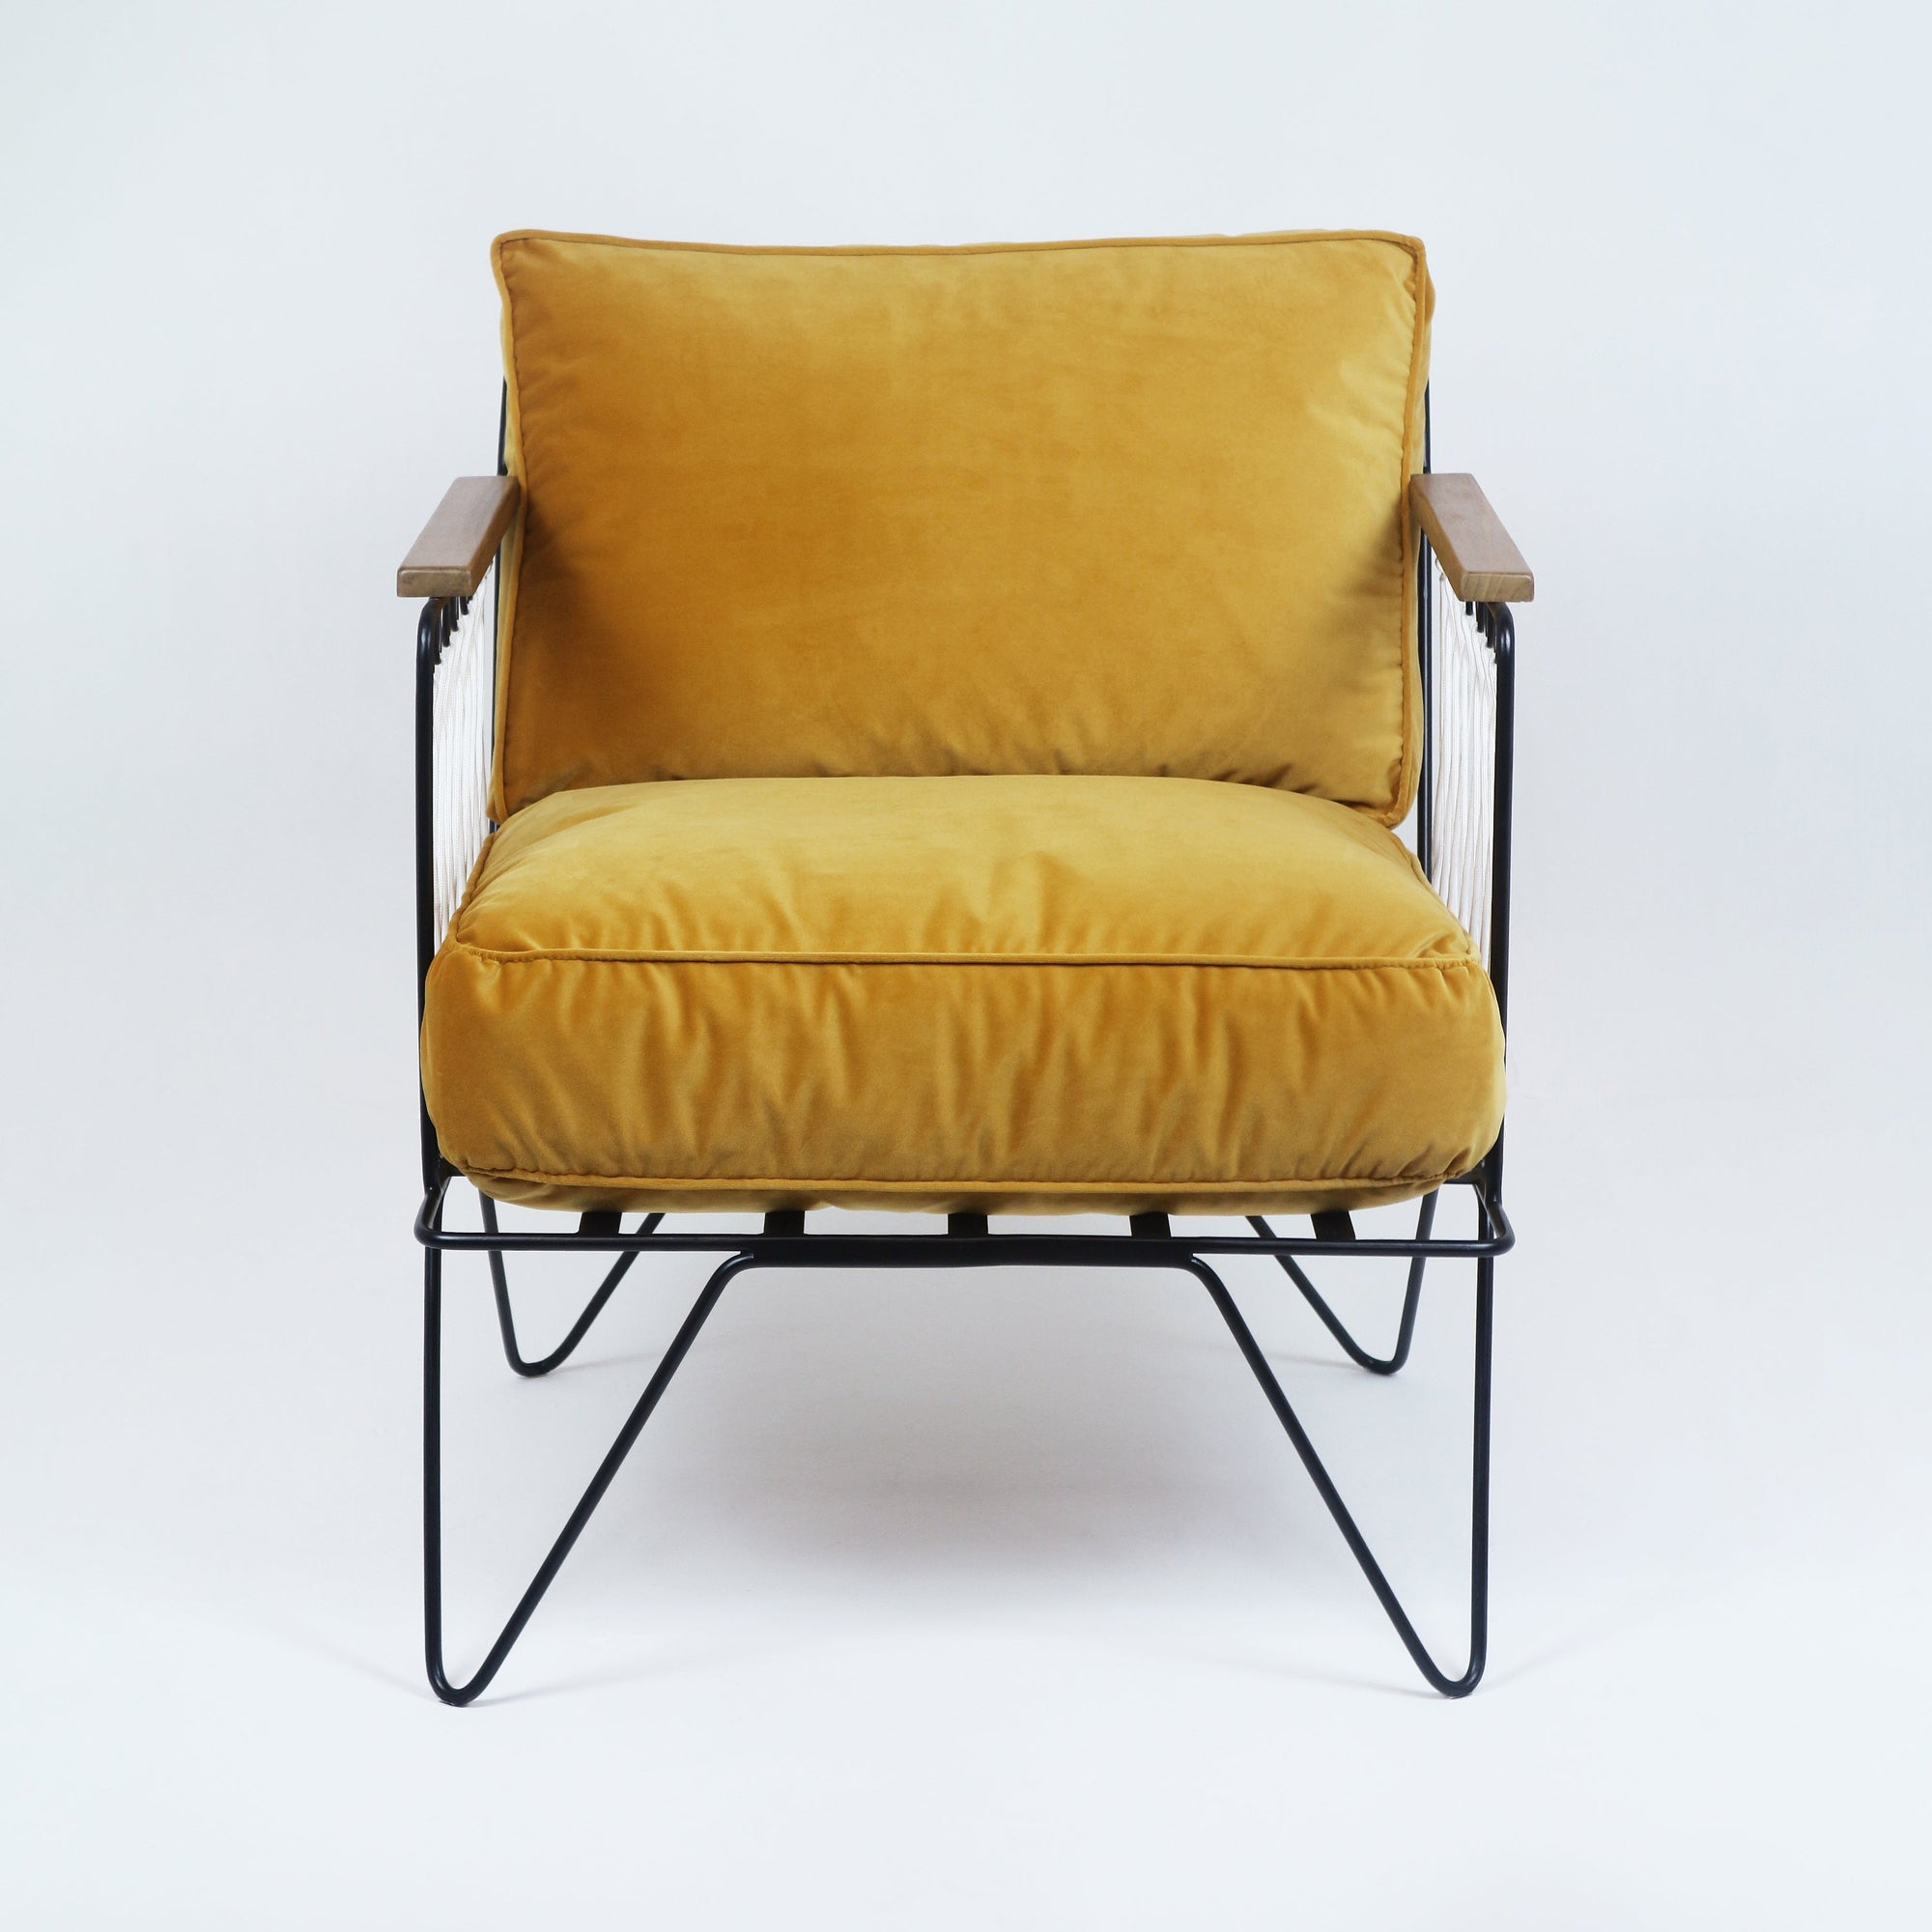 The Croisette English Summer Chair - INTERIORTONIC